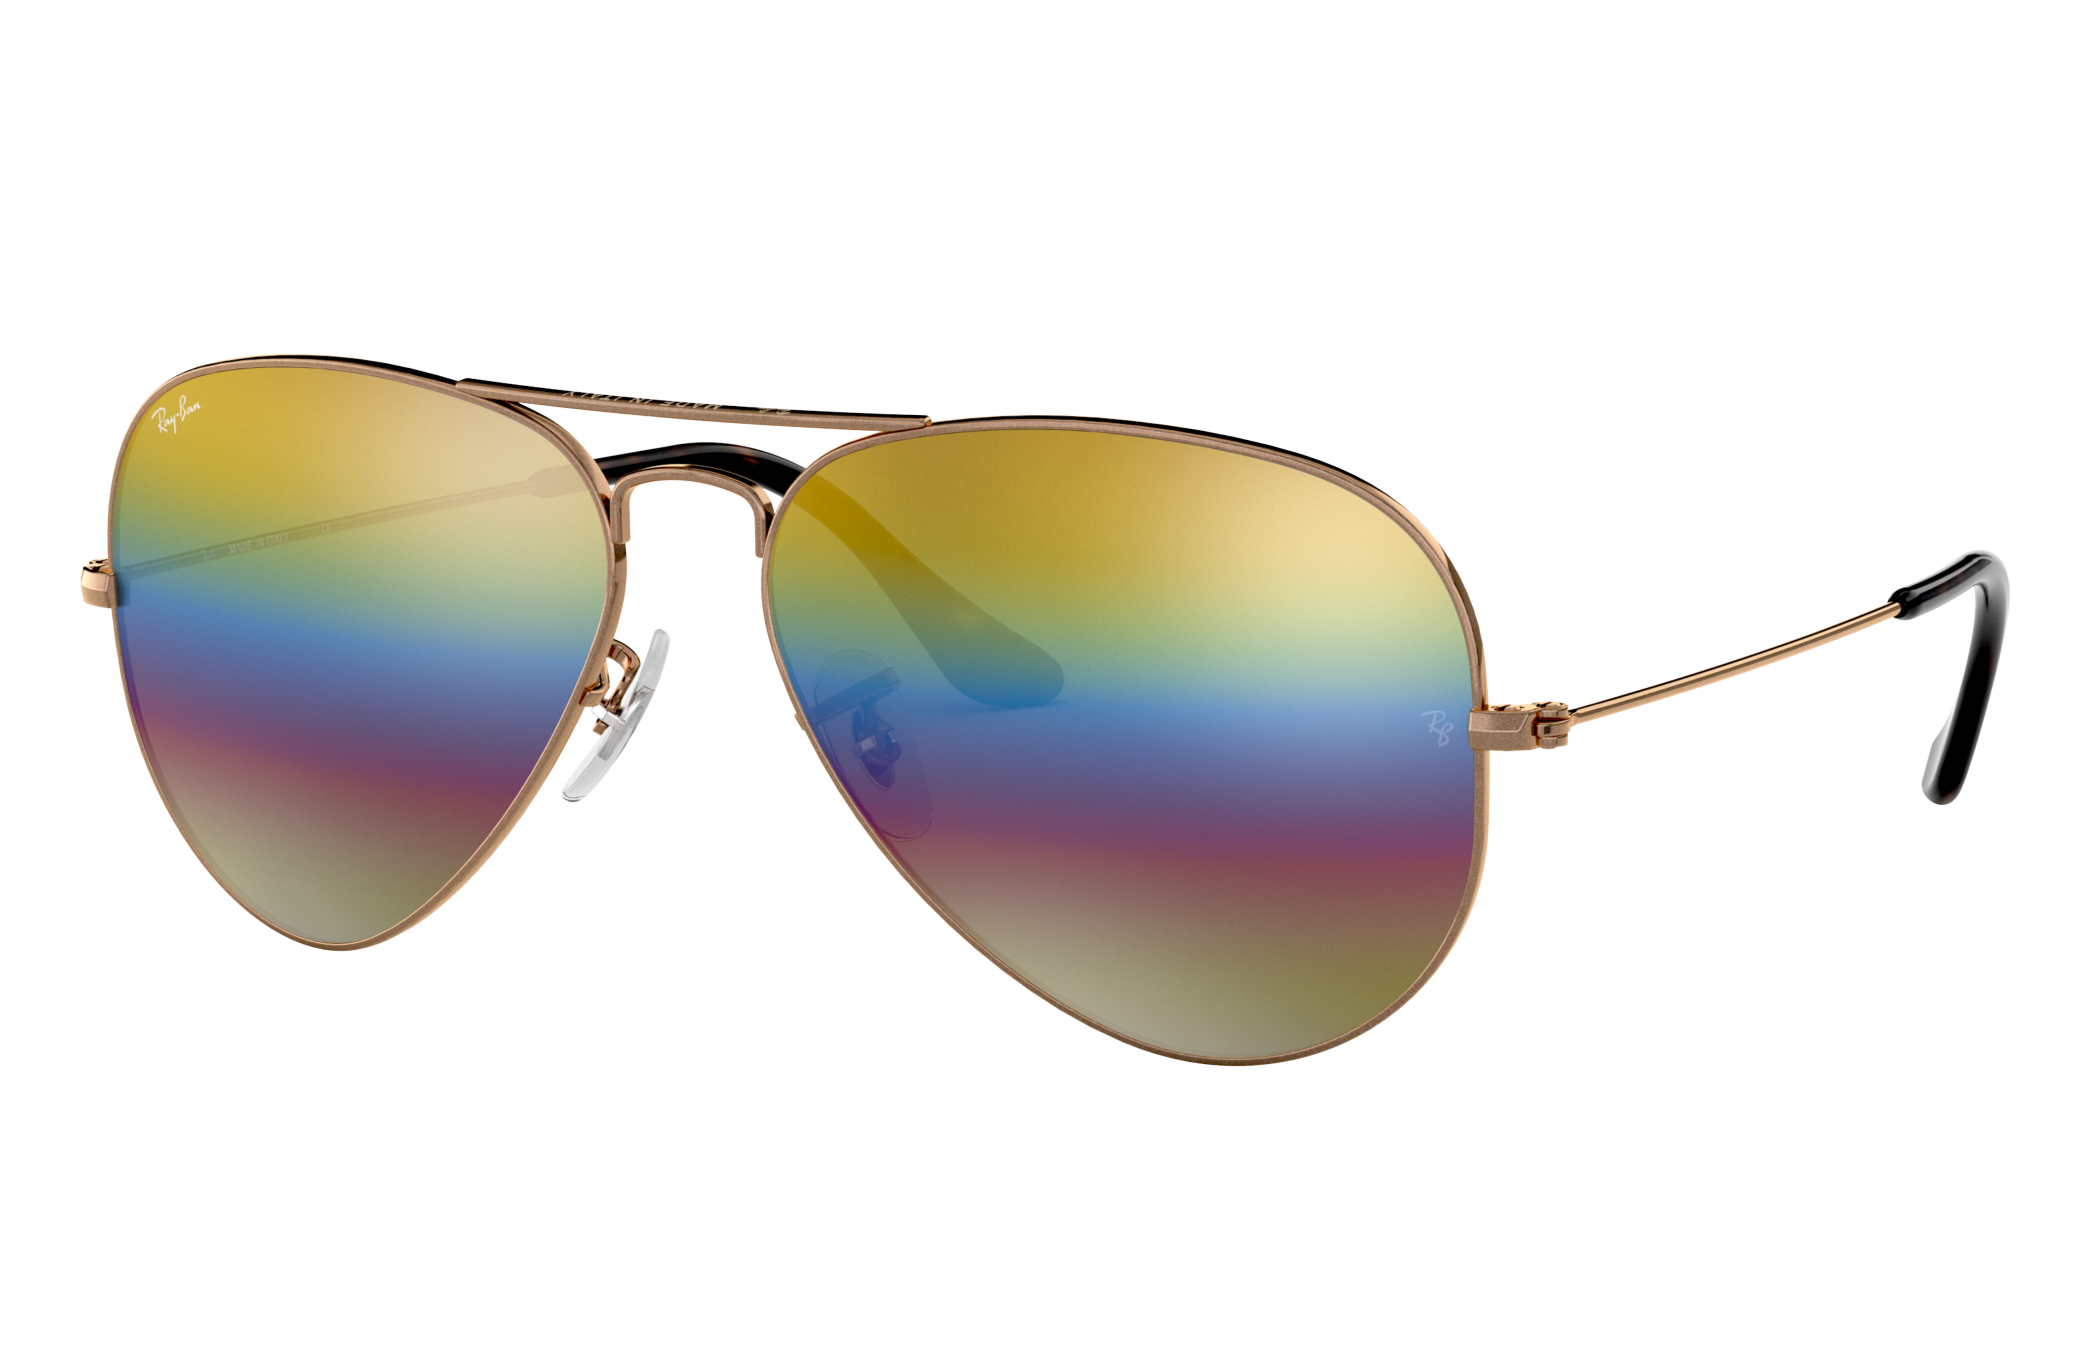 original ray ban aviator sunglasses price in india